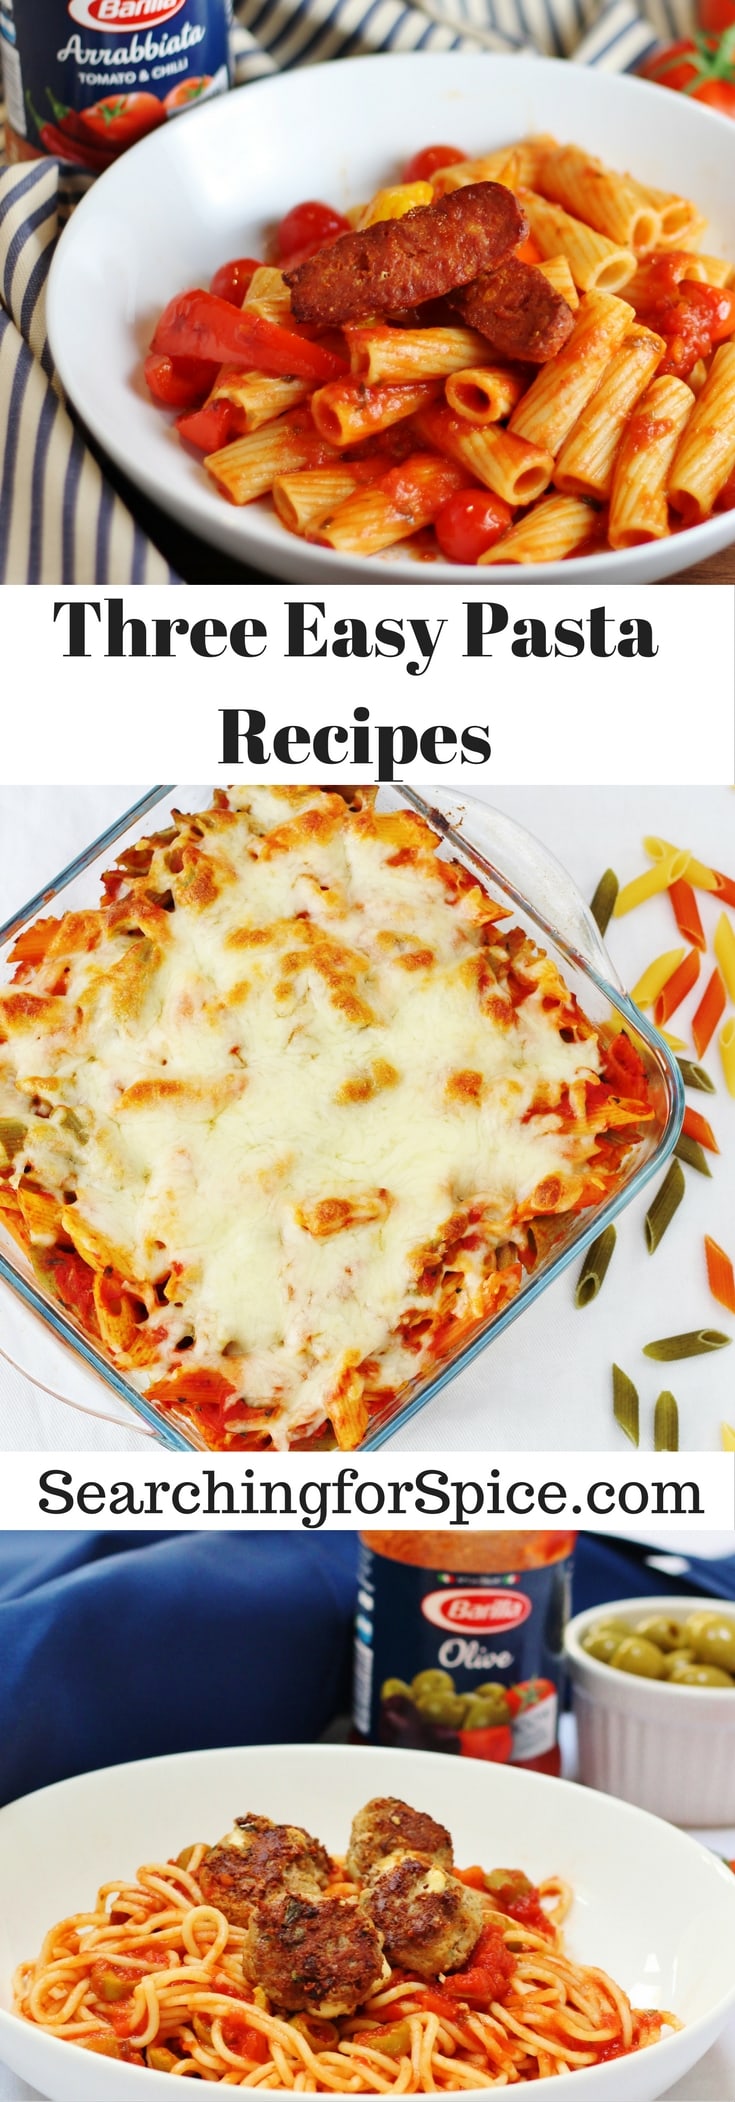 Three easy pasta recipes with Barilla pasta and sauces